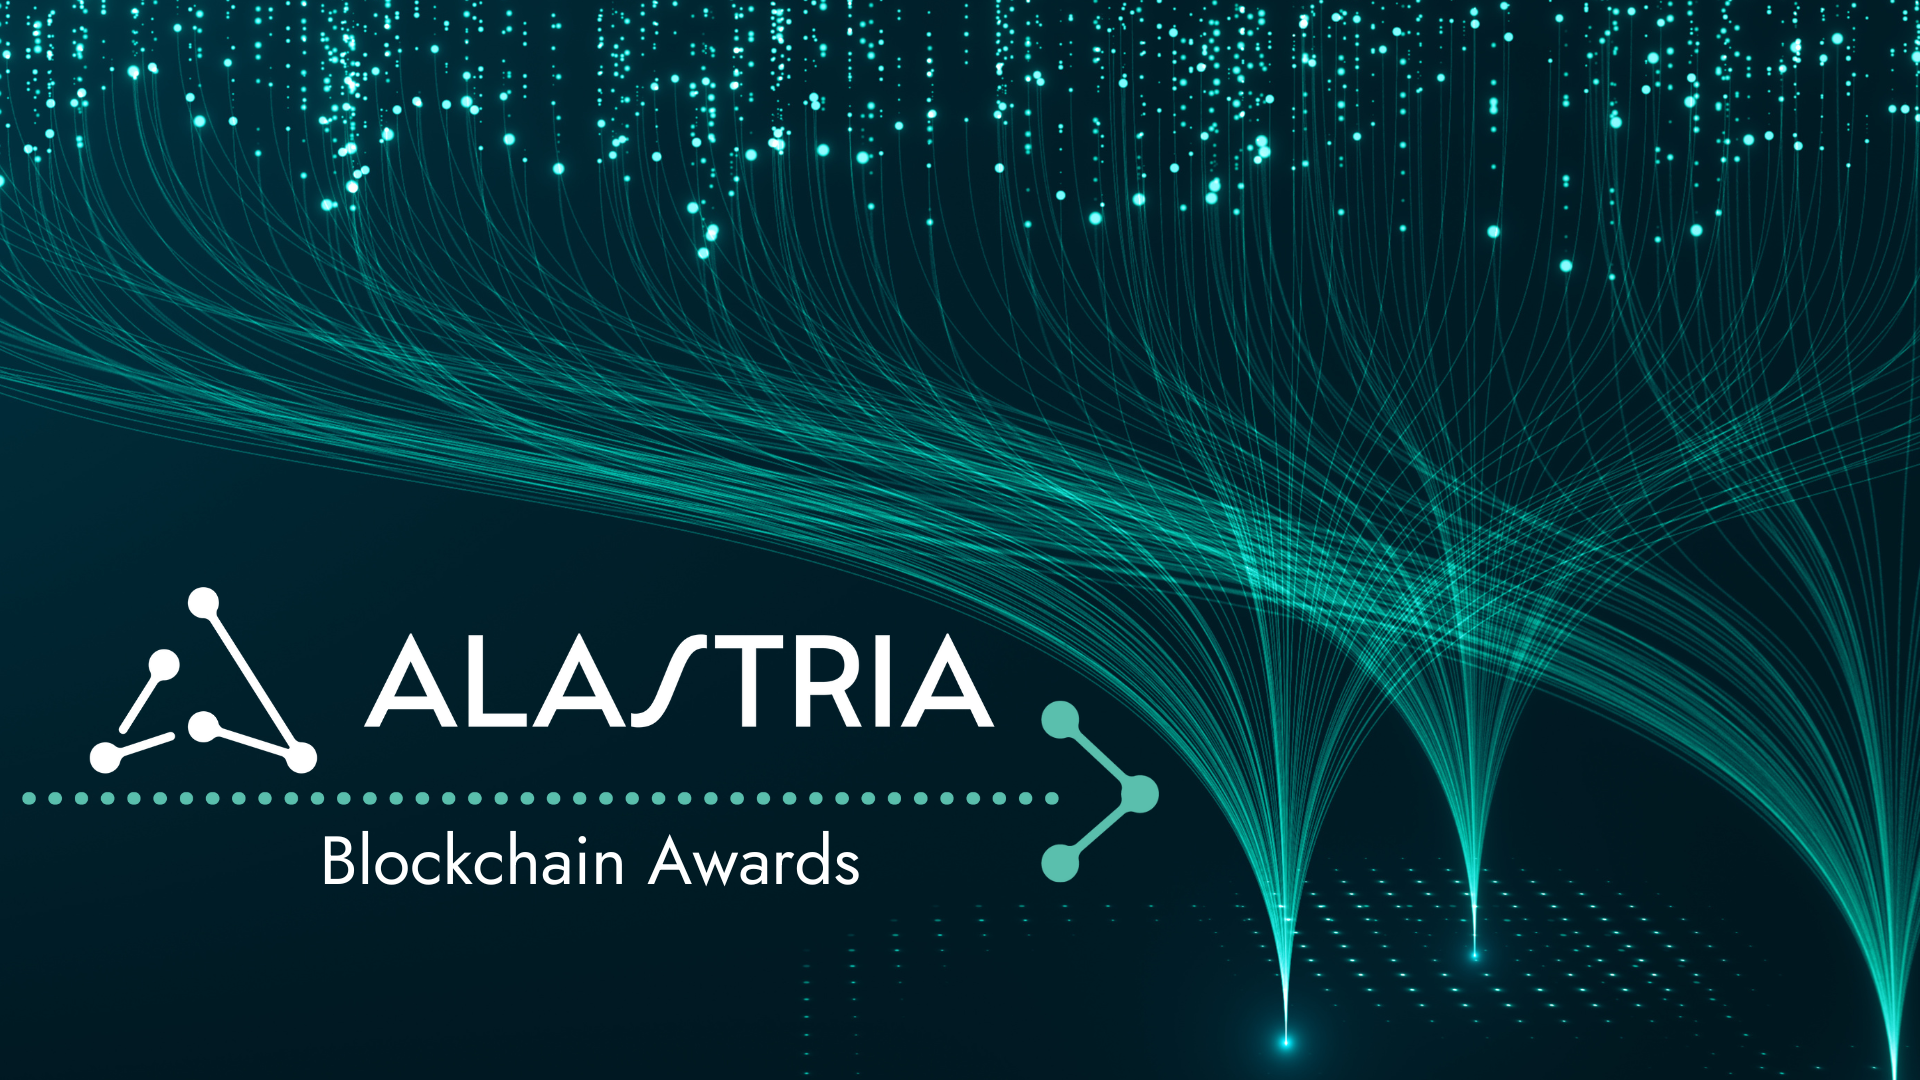 Alastria launches the Blockchain Awards